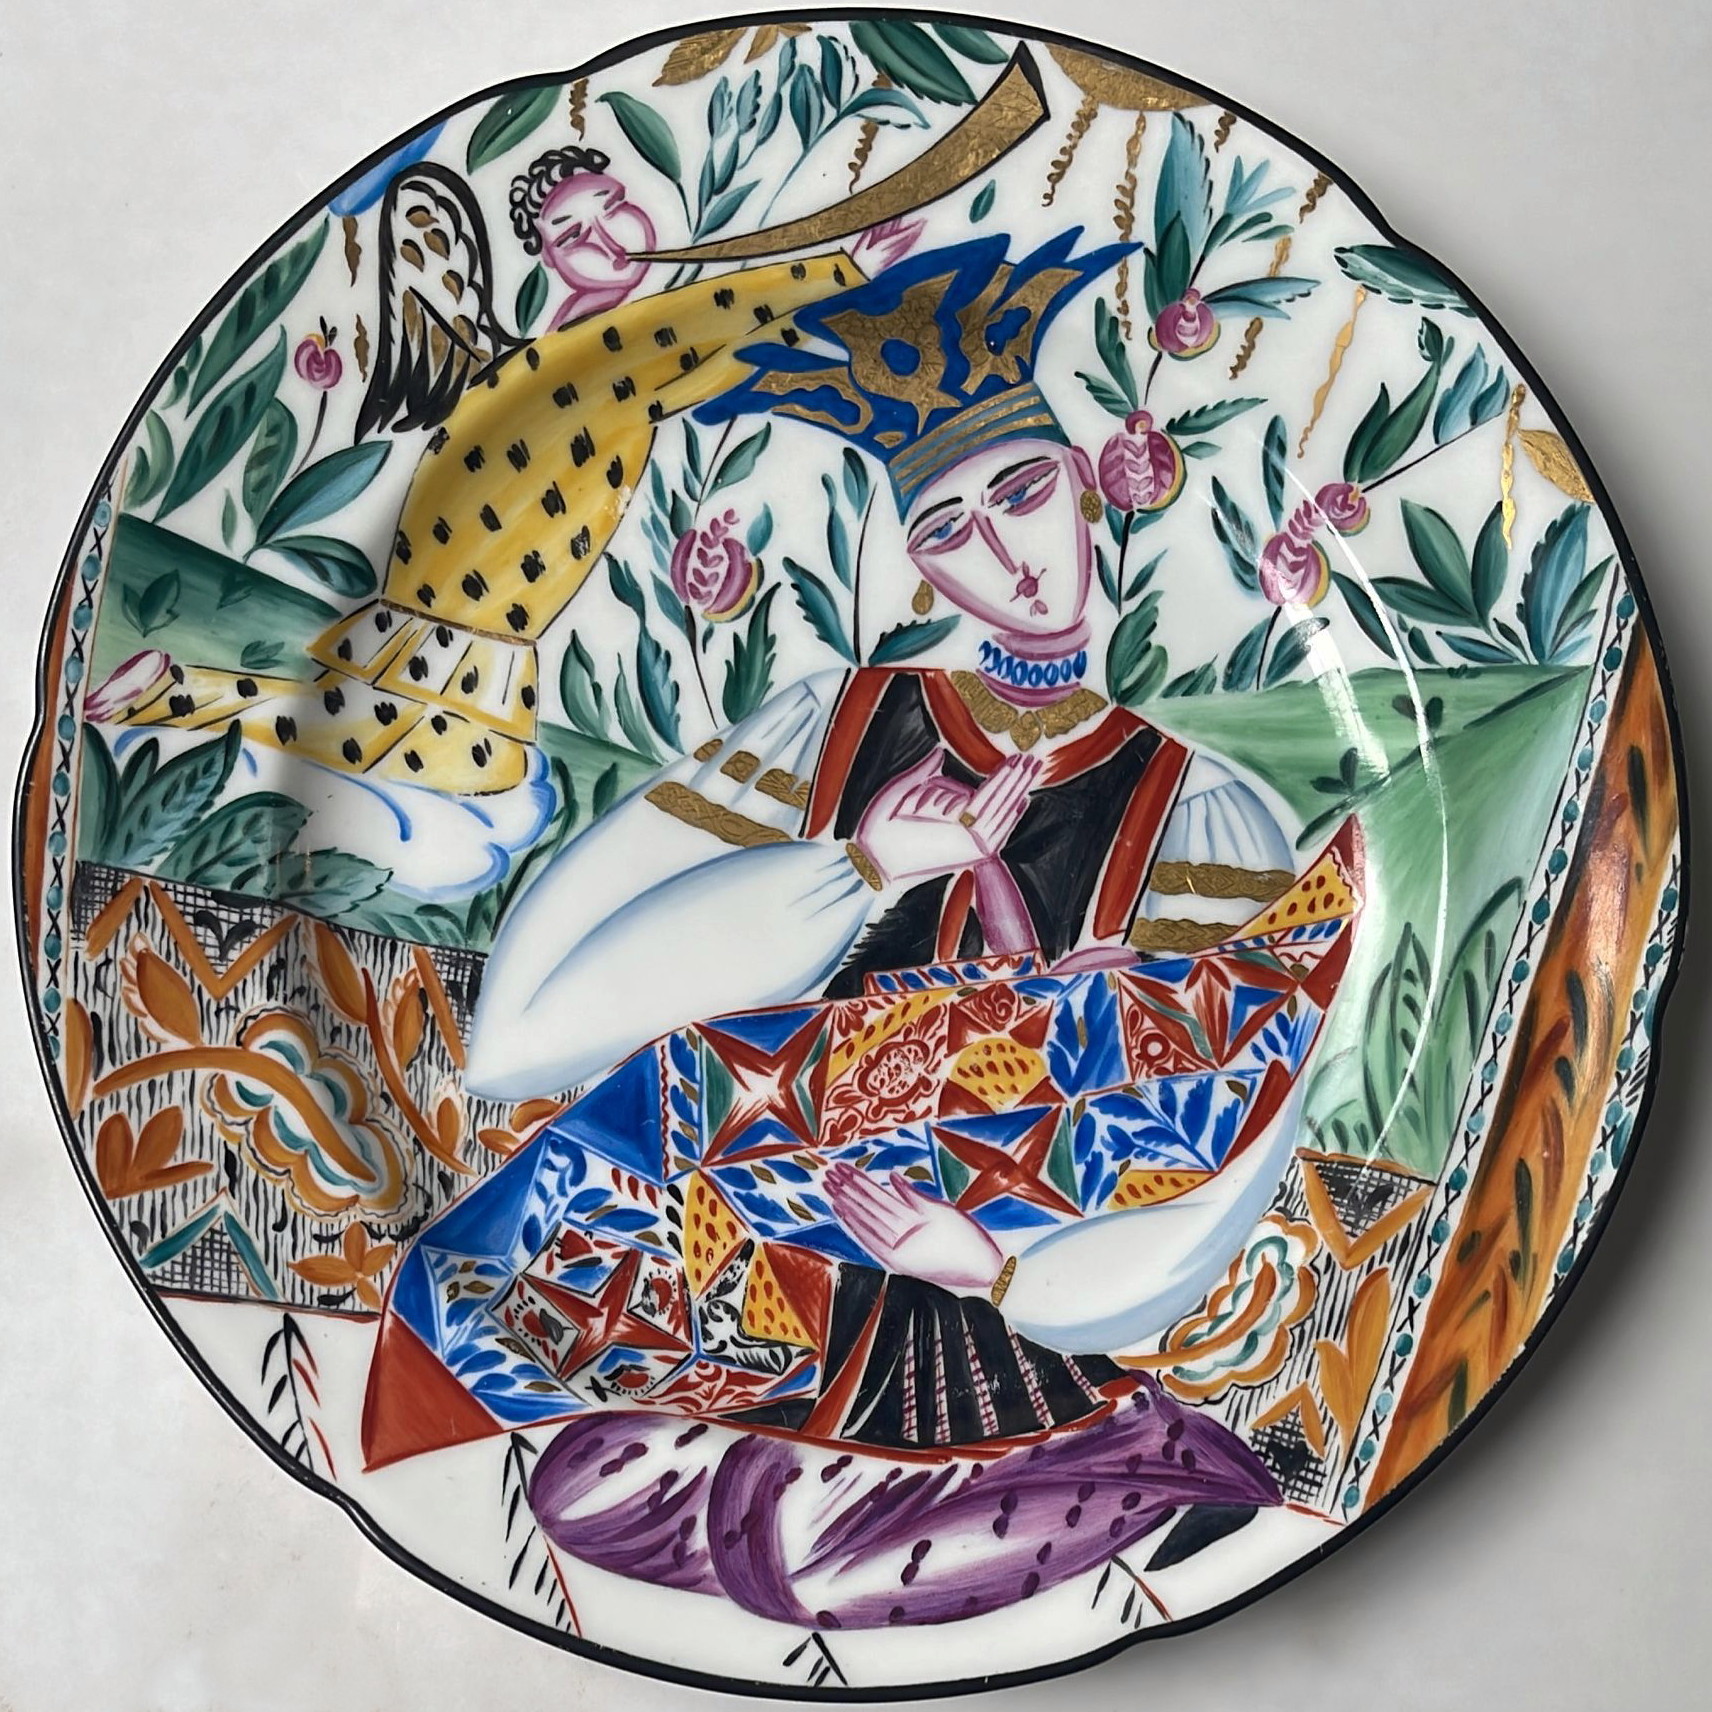 Soviet porcelain plate "Motherhood" by Shchekotikhina-Pototskaya